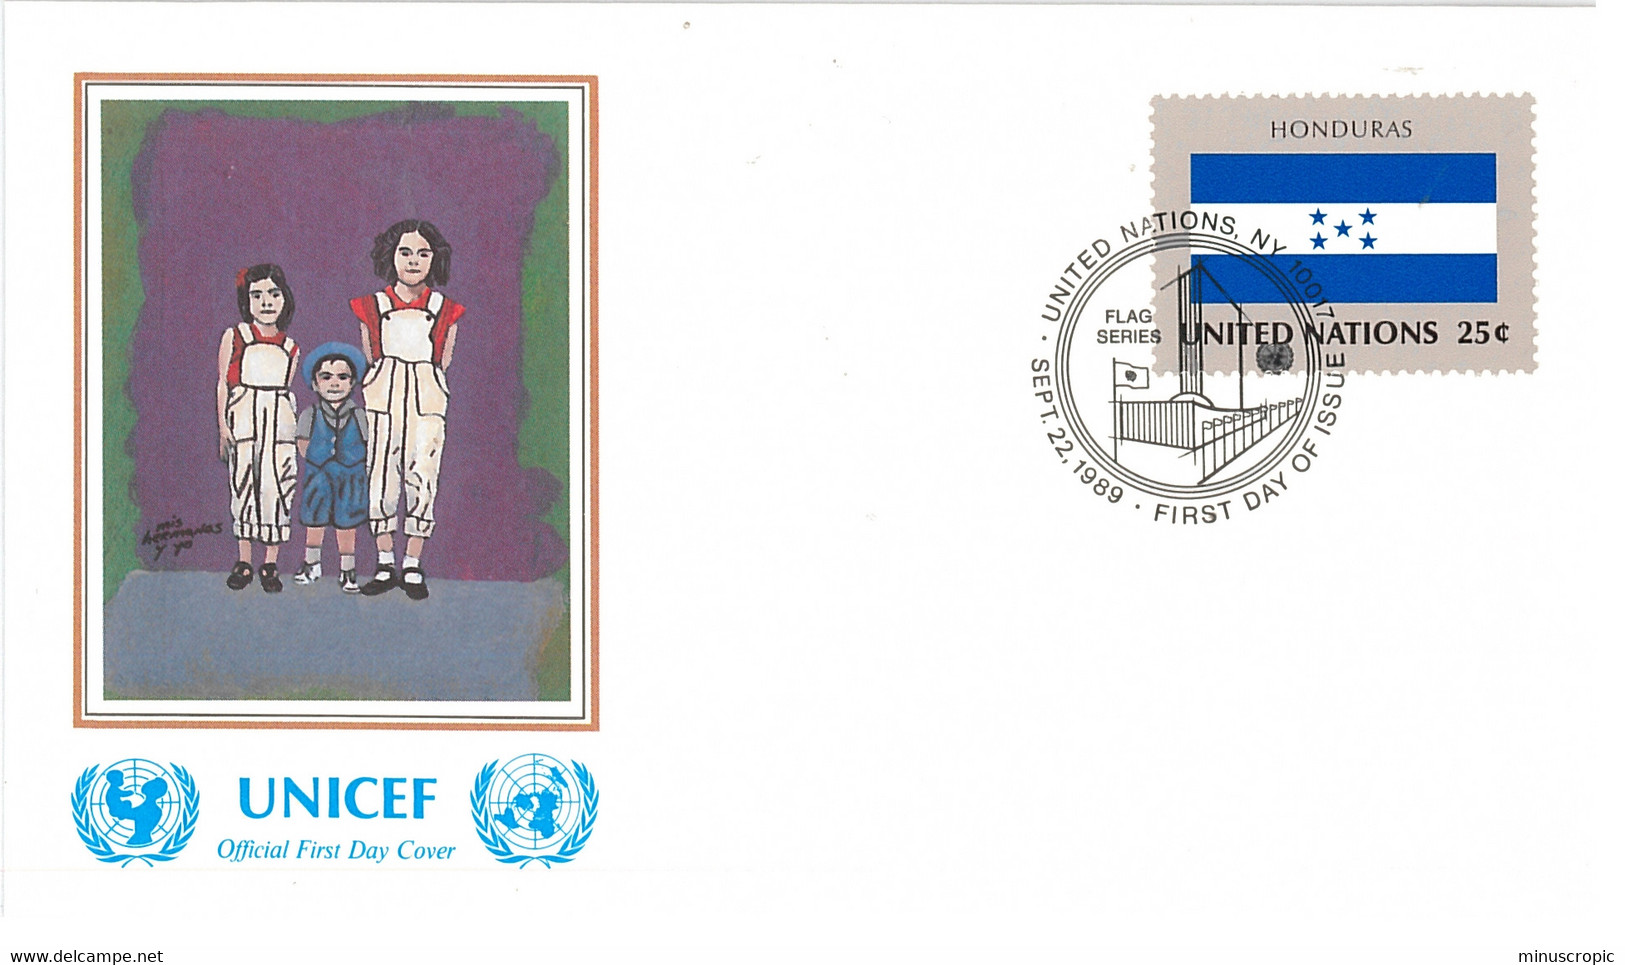 Enveloppe FDC United Nations - UNICEF - Flag Series 7/89 - Honduras - 1989 - Briefe U. Dokumente